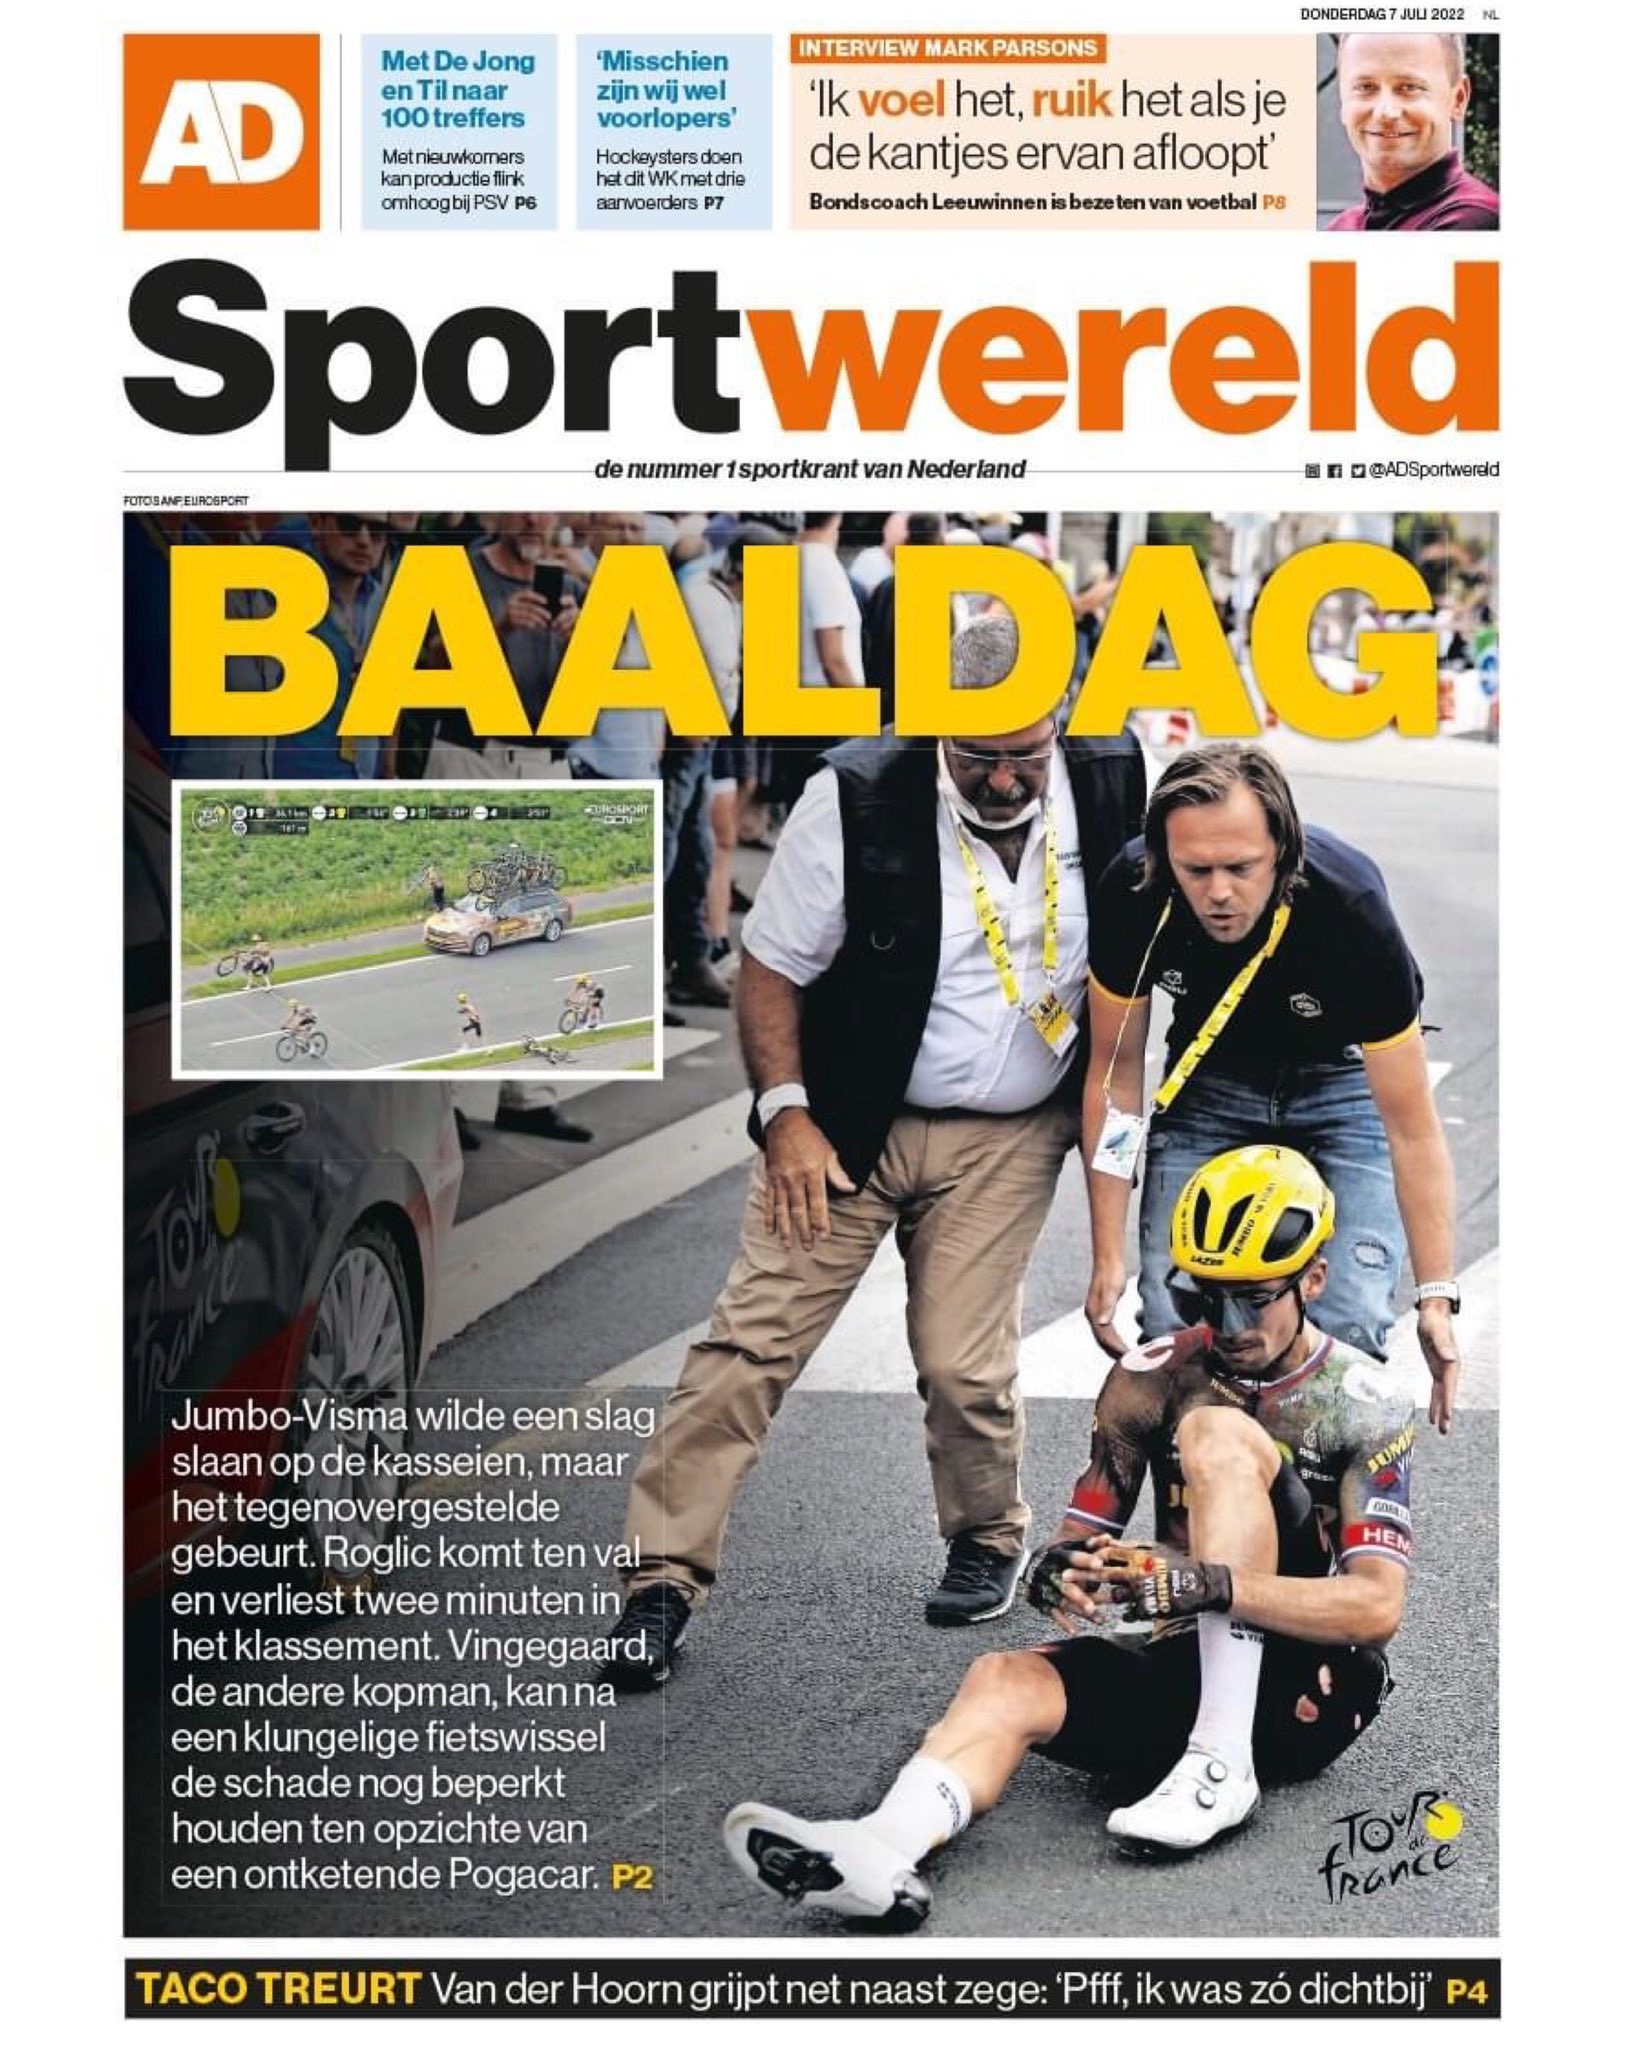 prima pagina sportwereld olanda